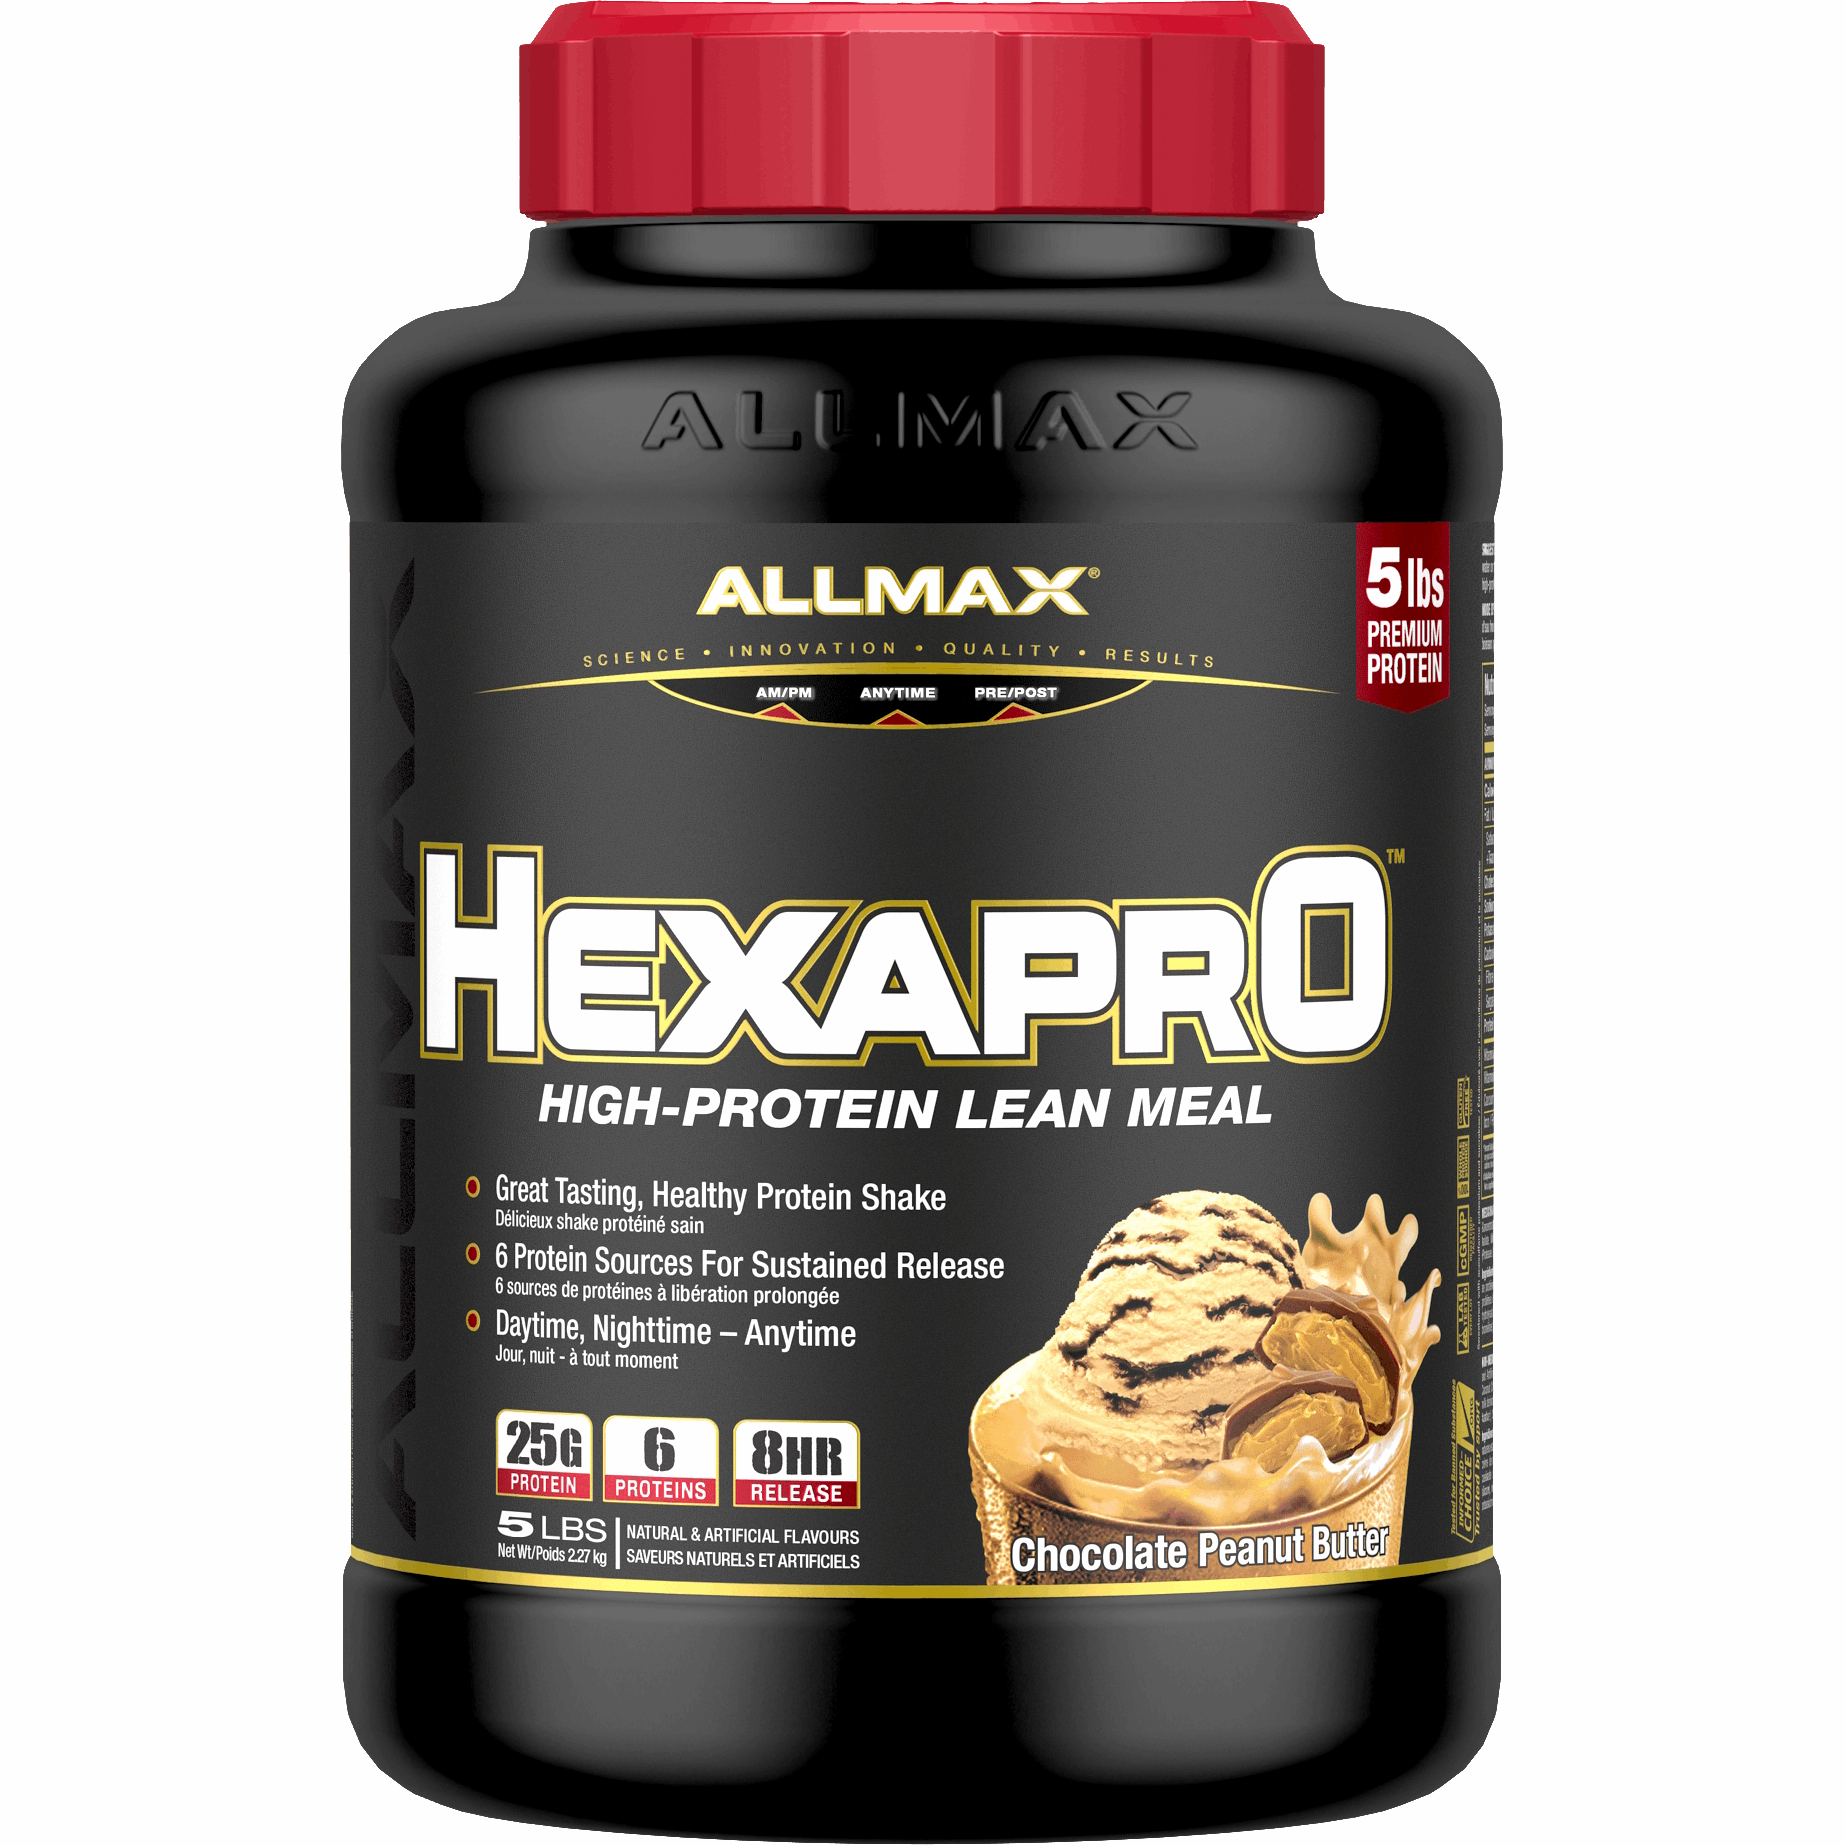 ALLMAX Hexapro (5 LBS) Whey Protein Blend Chocolate Peanut Butter Allmax Nutrition